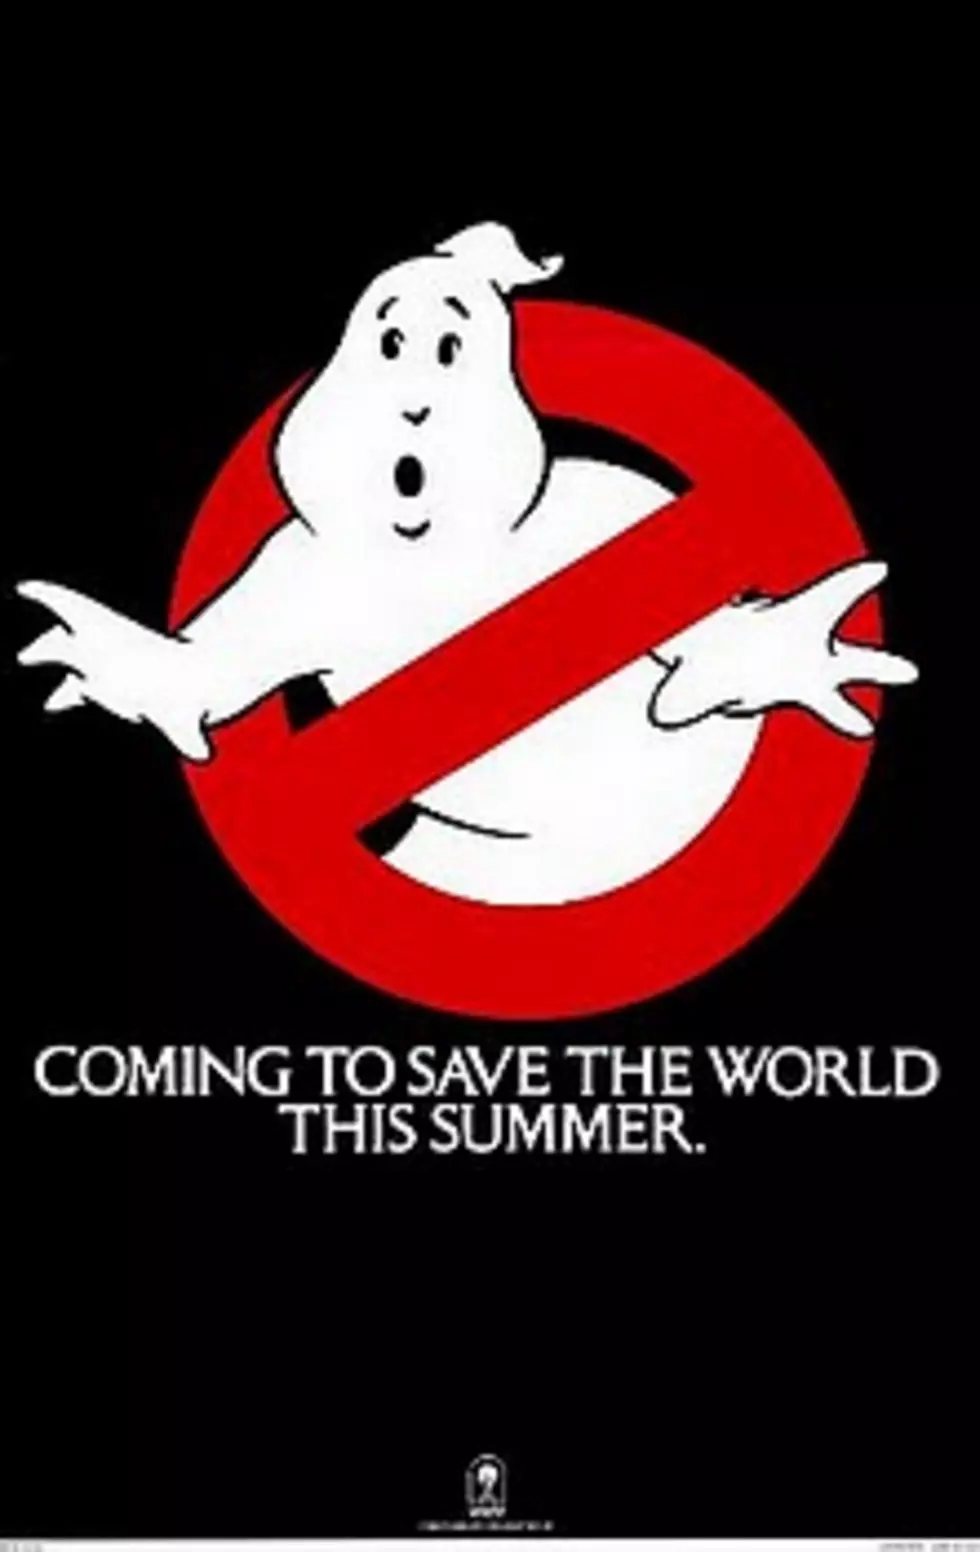 Dan Aykroyd Talks Script &#038; Casting For &#8220;Ghostbusters 3&#8243;